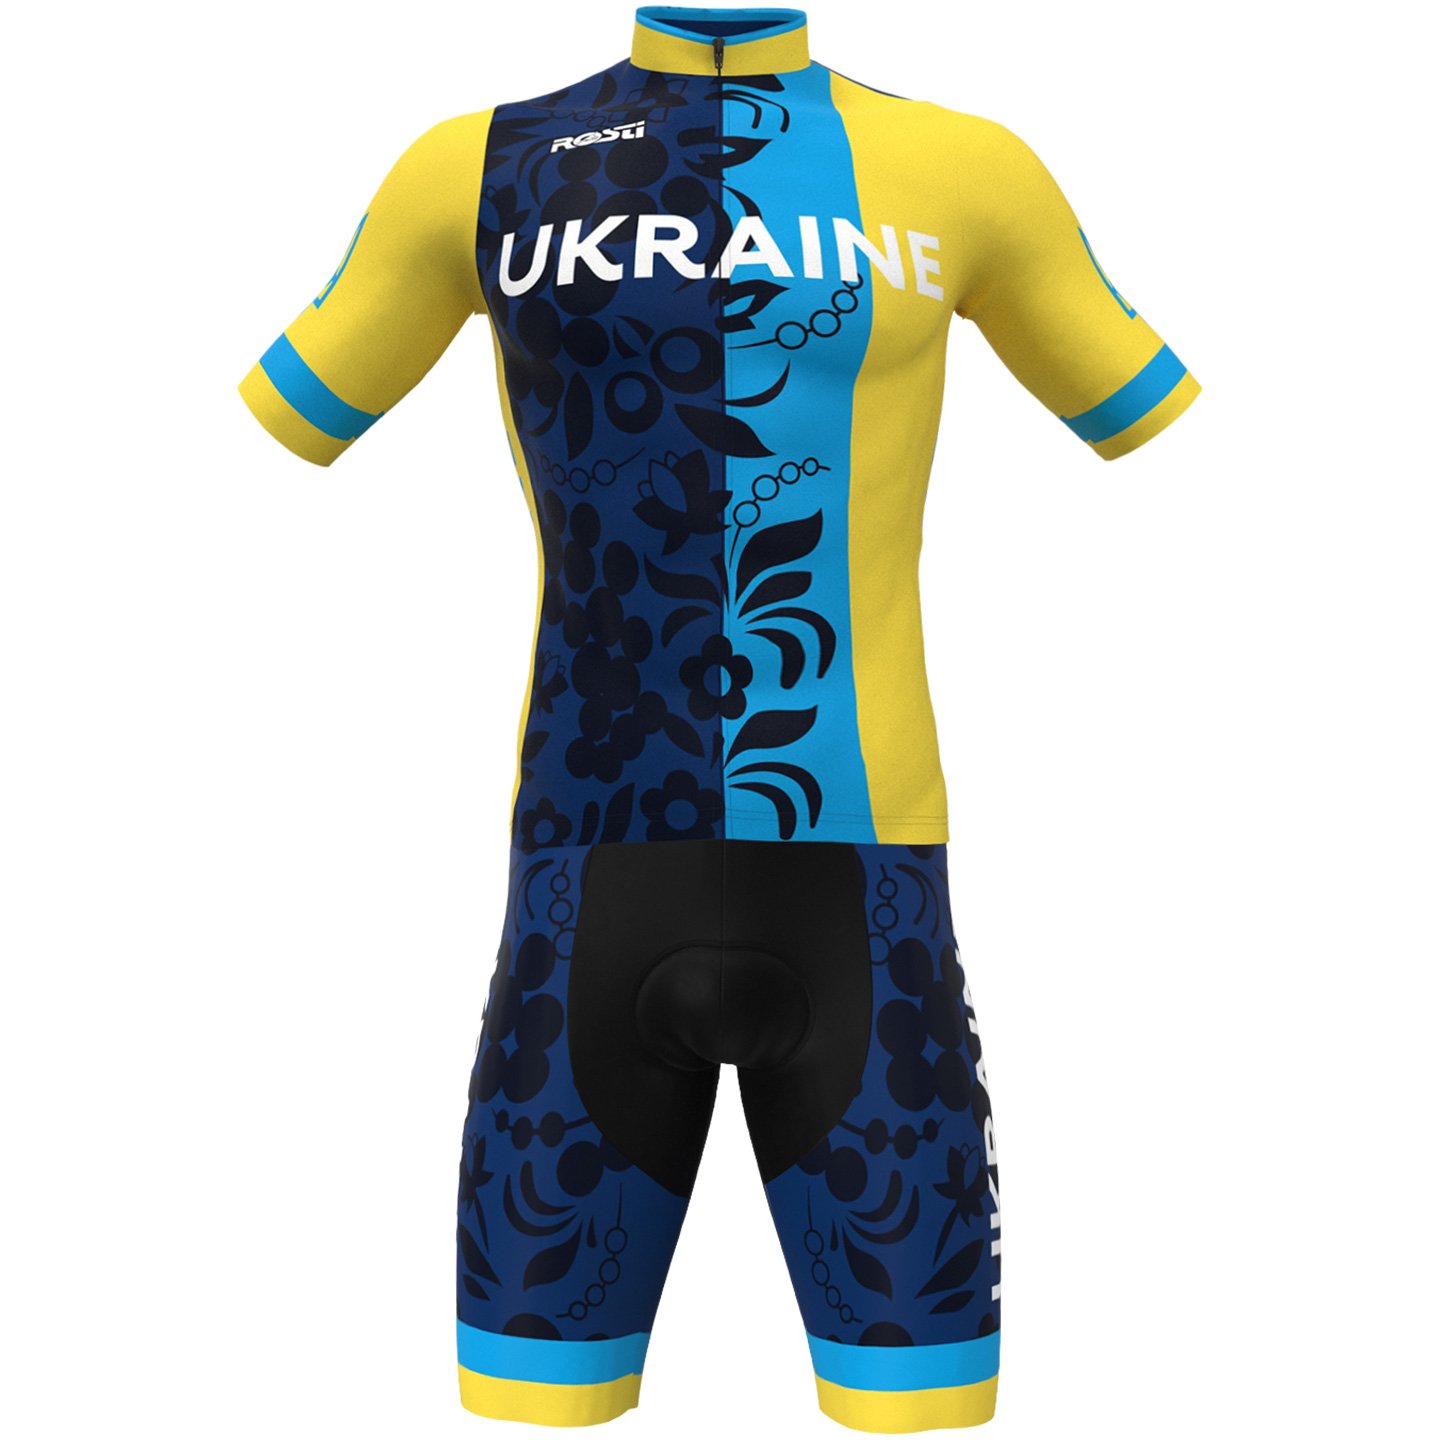 Ukrainische Uniform - KibrisPDR